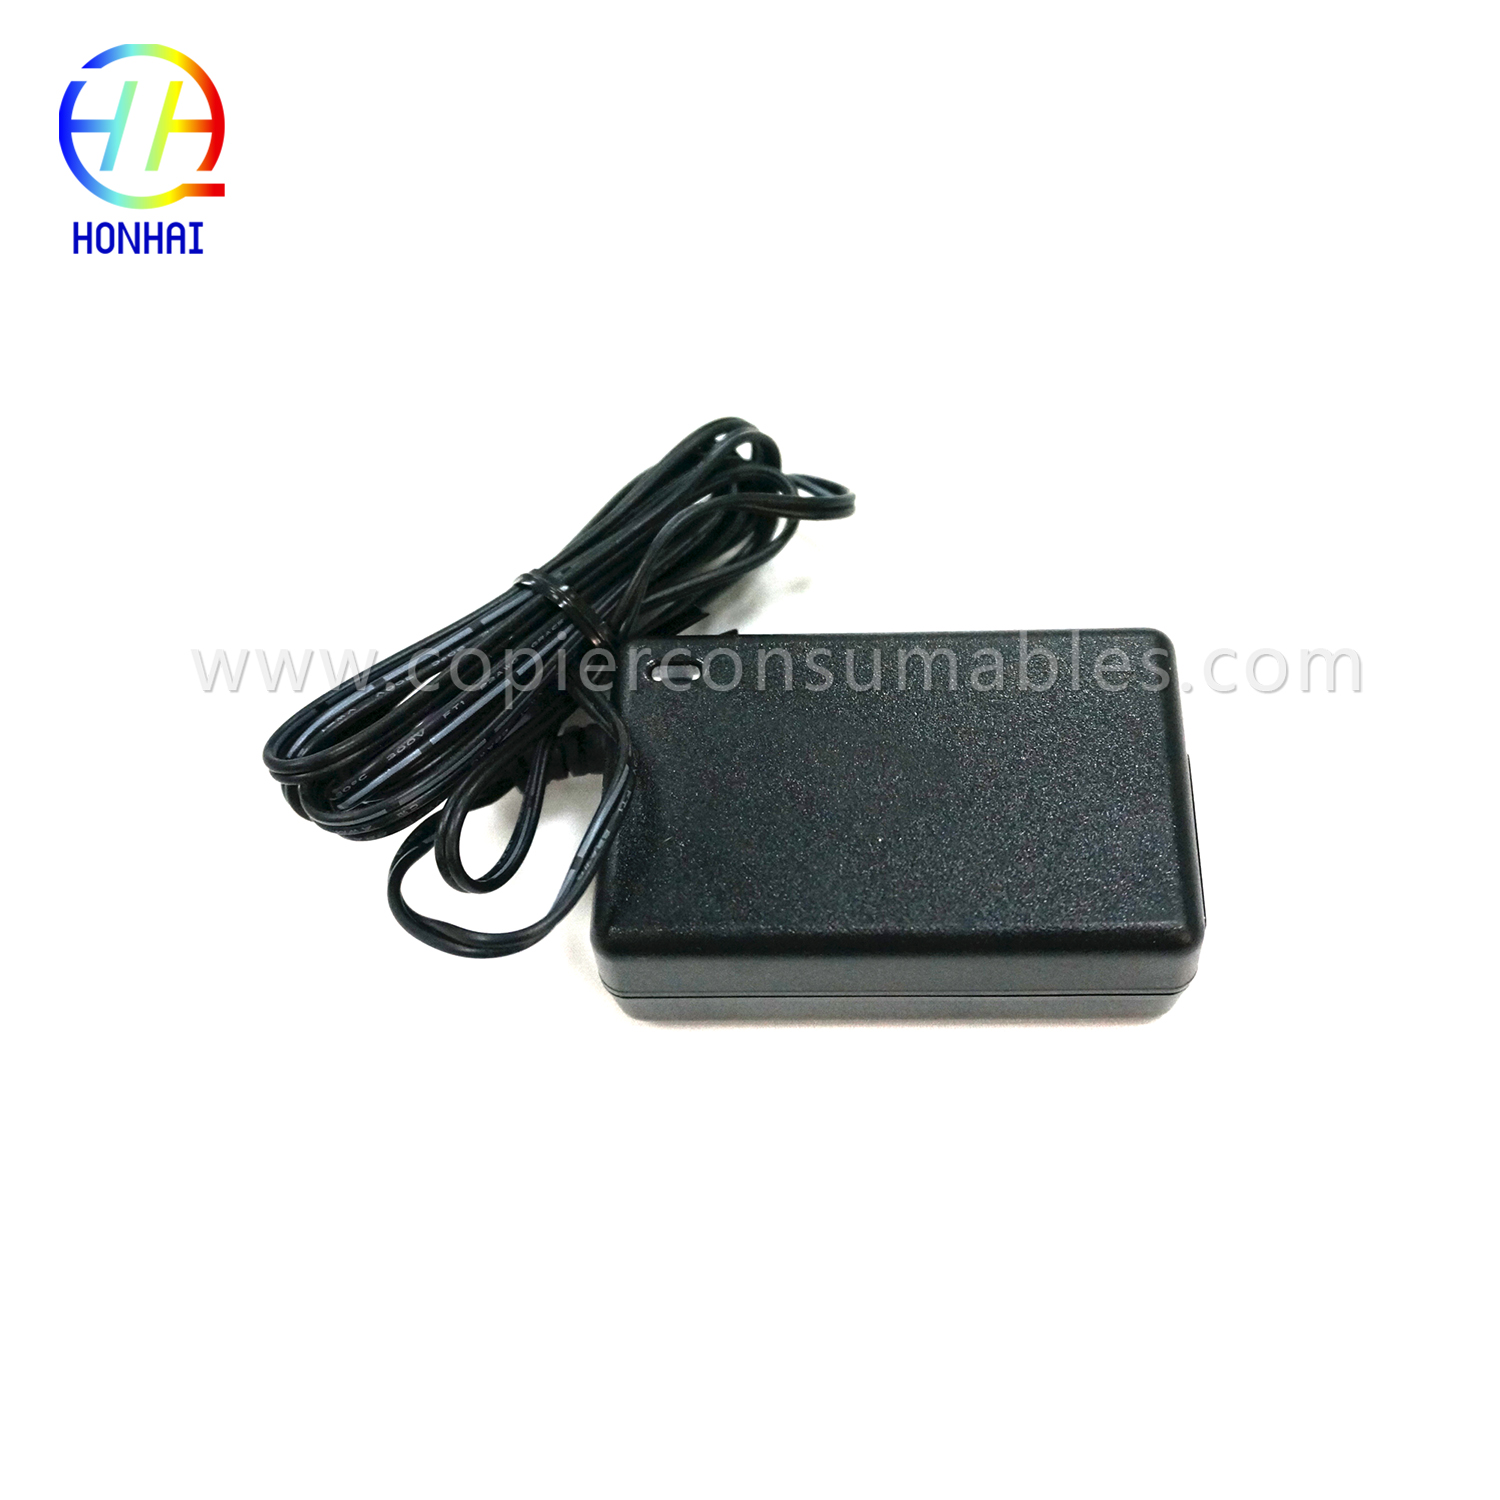 Зарядное устройство для адаптера переменного тока HP Deskjet 1000 1050 2000 2050 2060 2010 0957-2286 30 В, 333 мА (3)